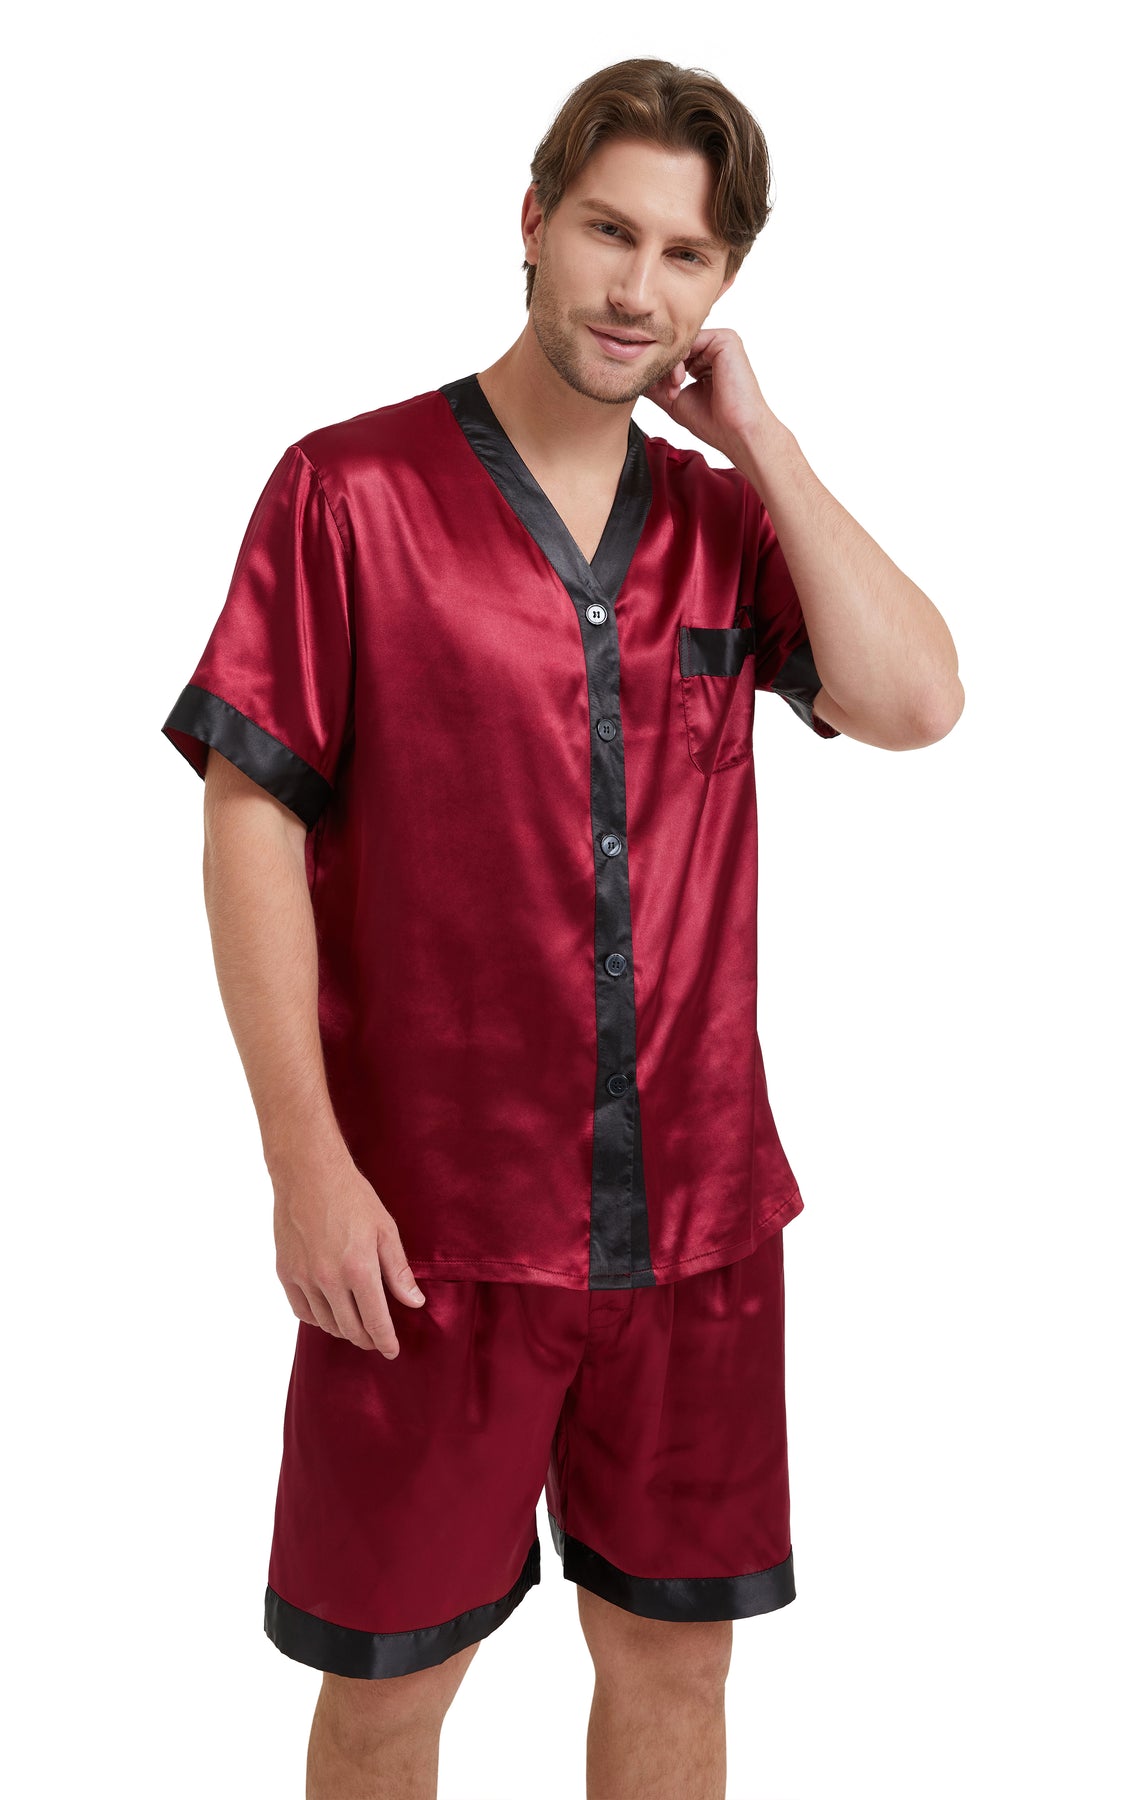 Tony & Candice - Pajamas, Sleepwear, Robe & More for Men, Women